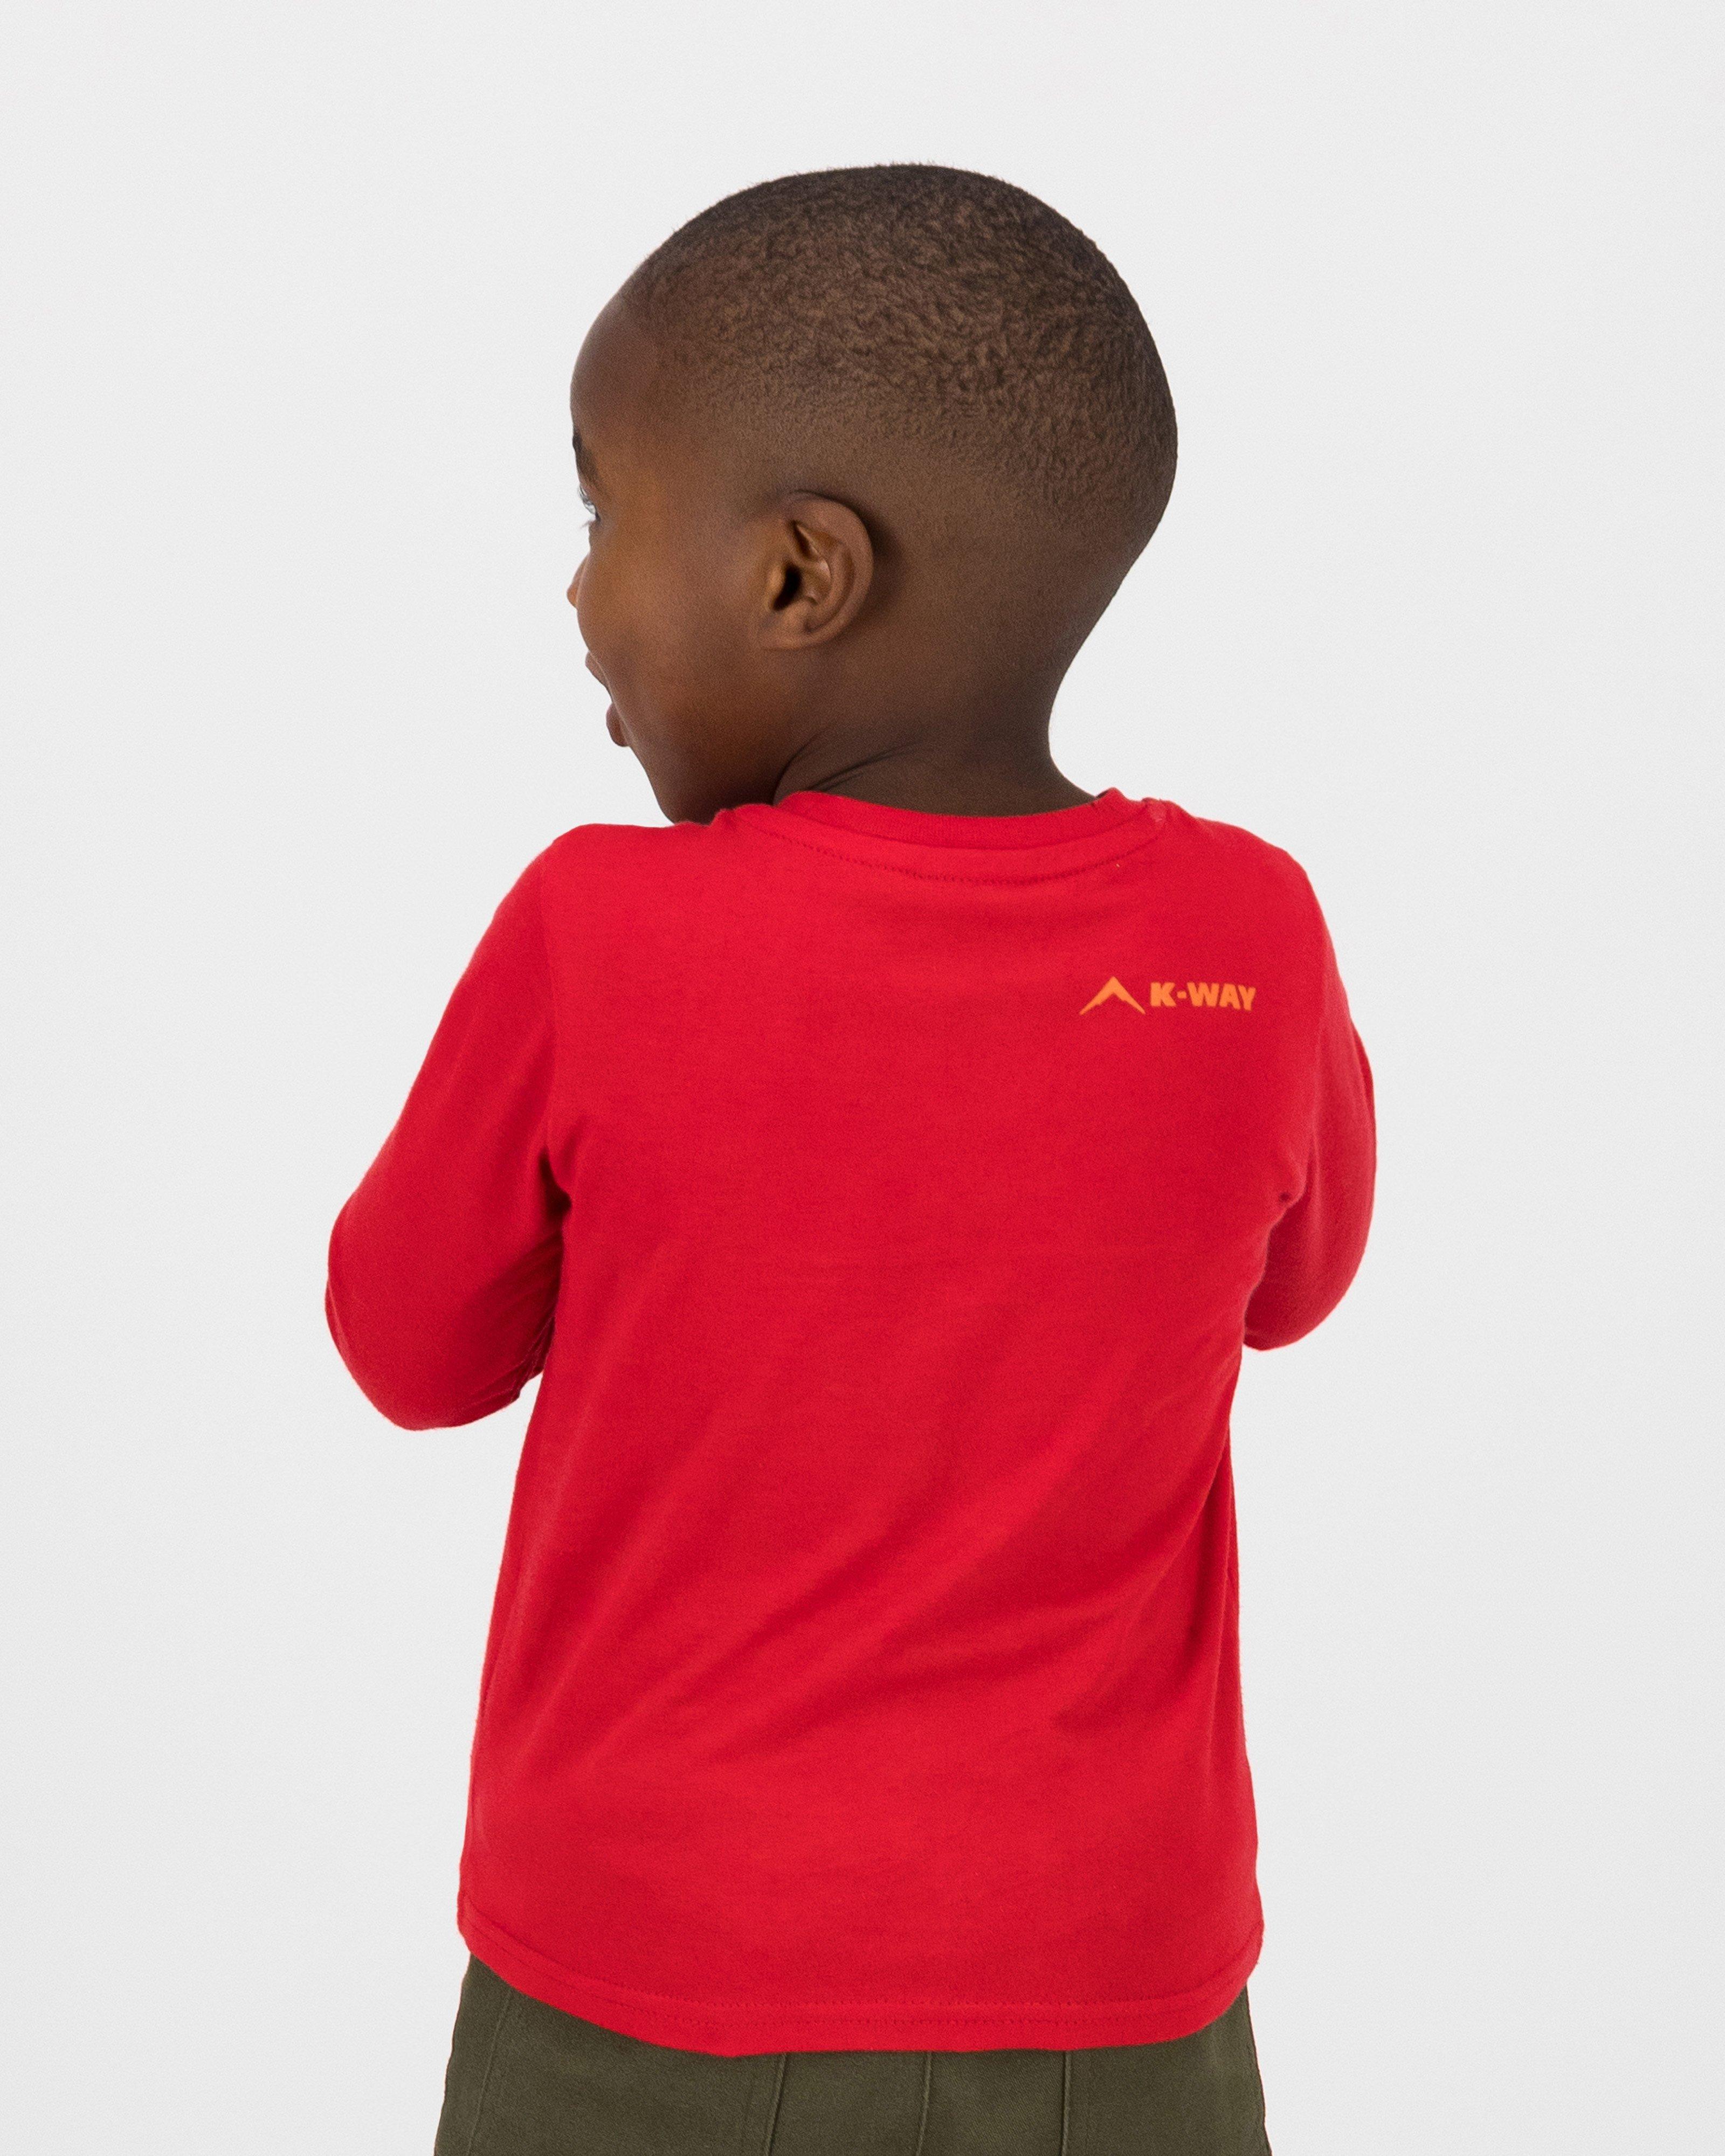 K-Way Kids Graphic T-shirt -  Red